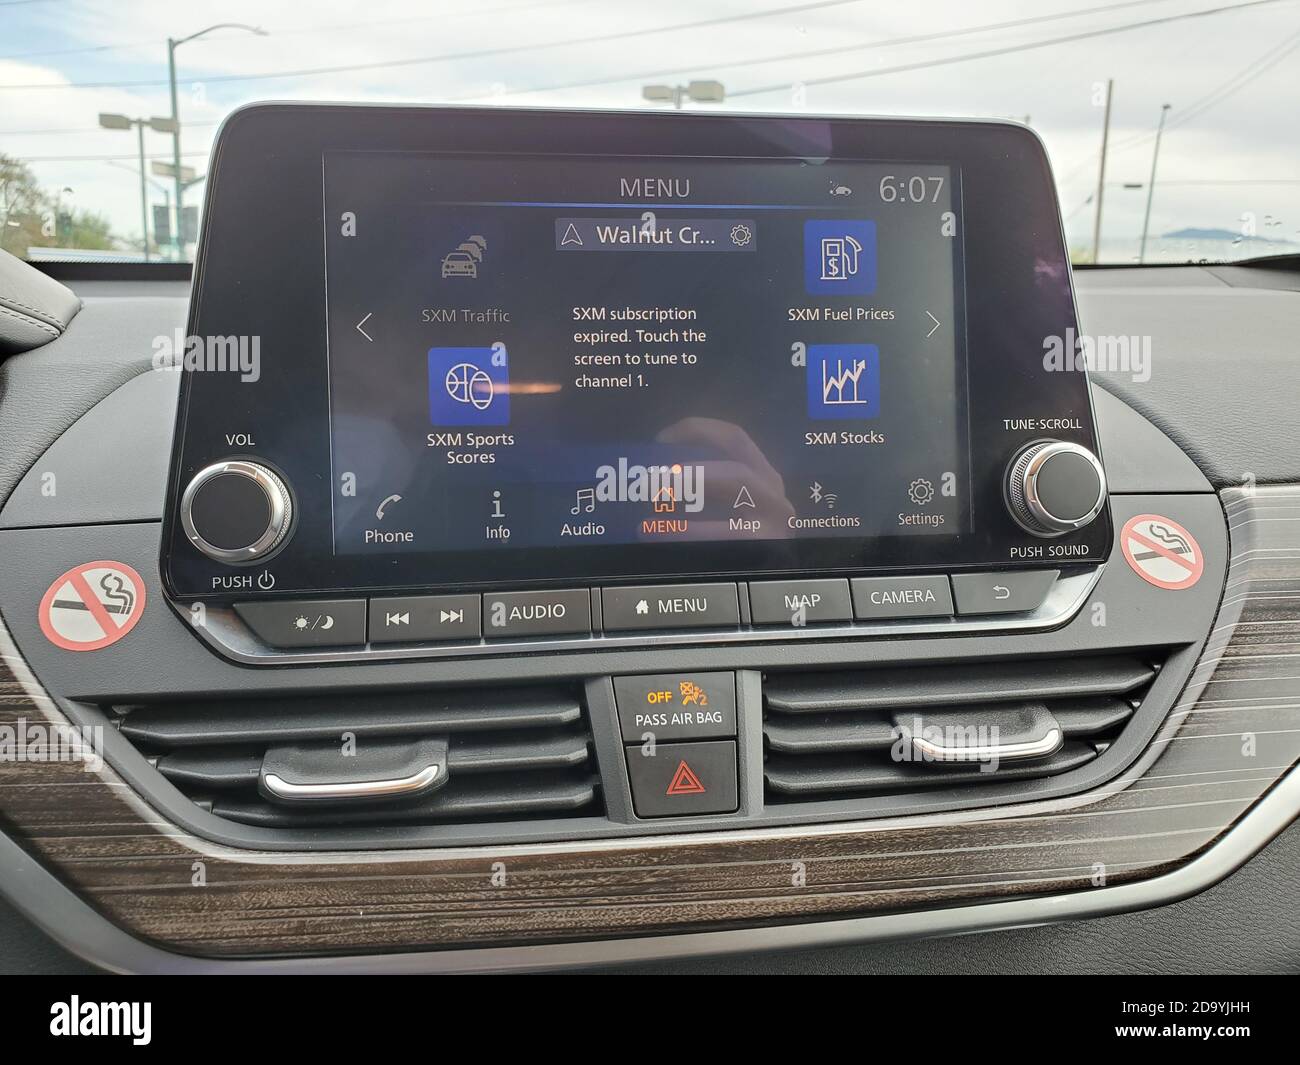 Center console screen display in Nissan automobile, Walnut Creek, California, October 9, 2020. () Stock Photo